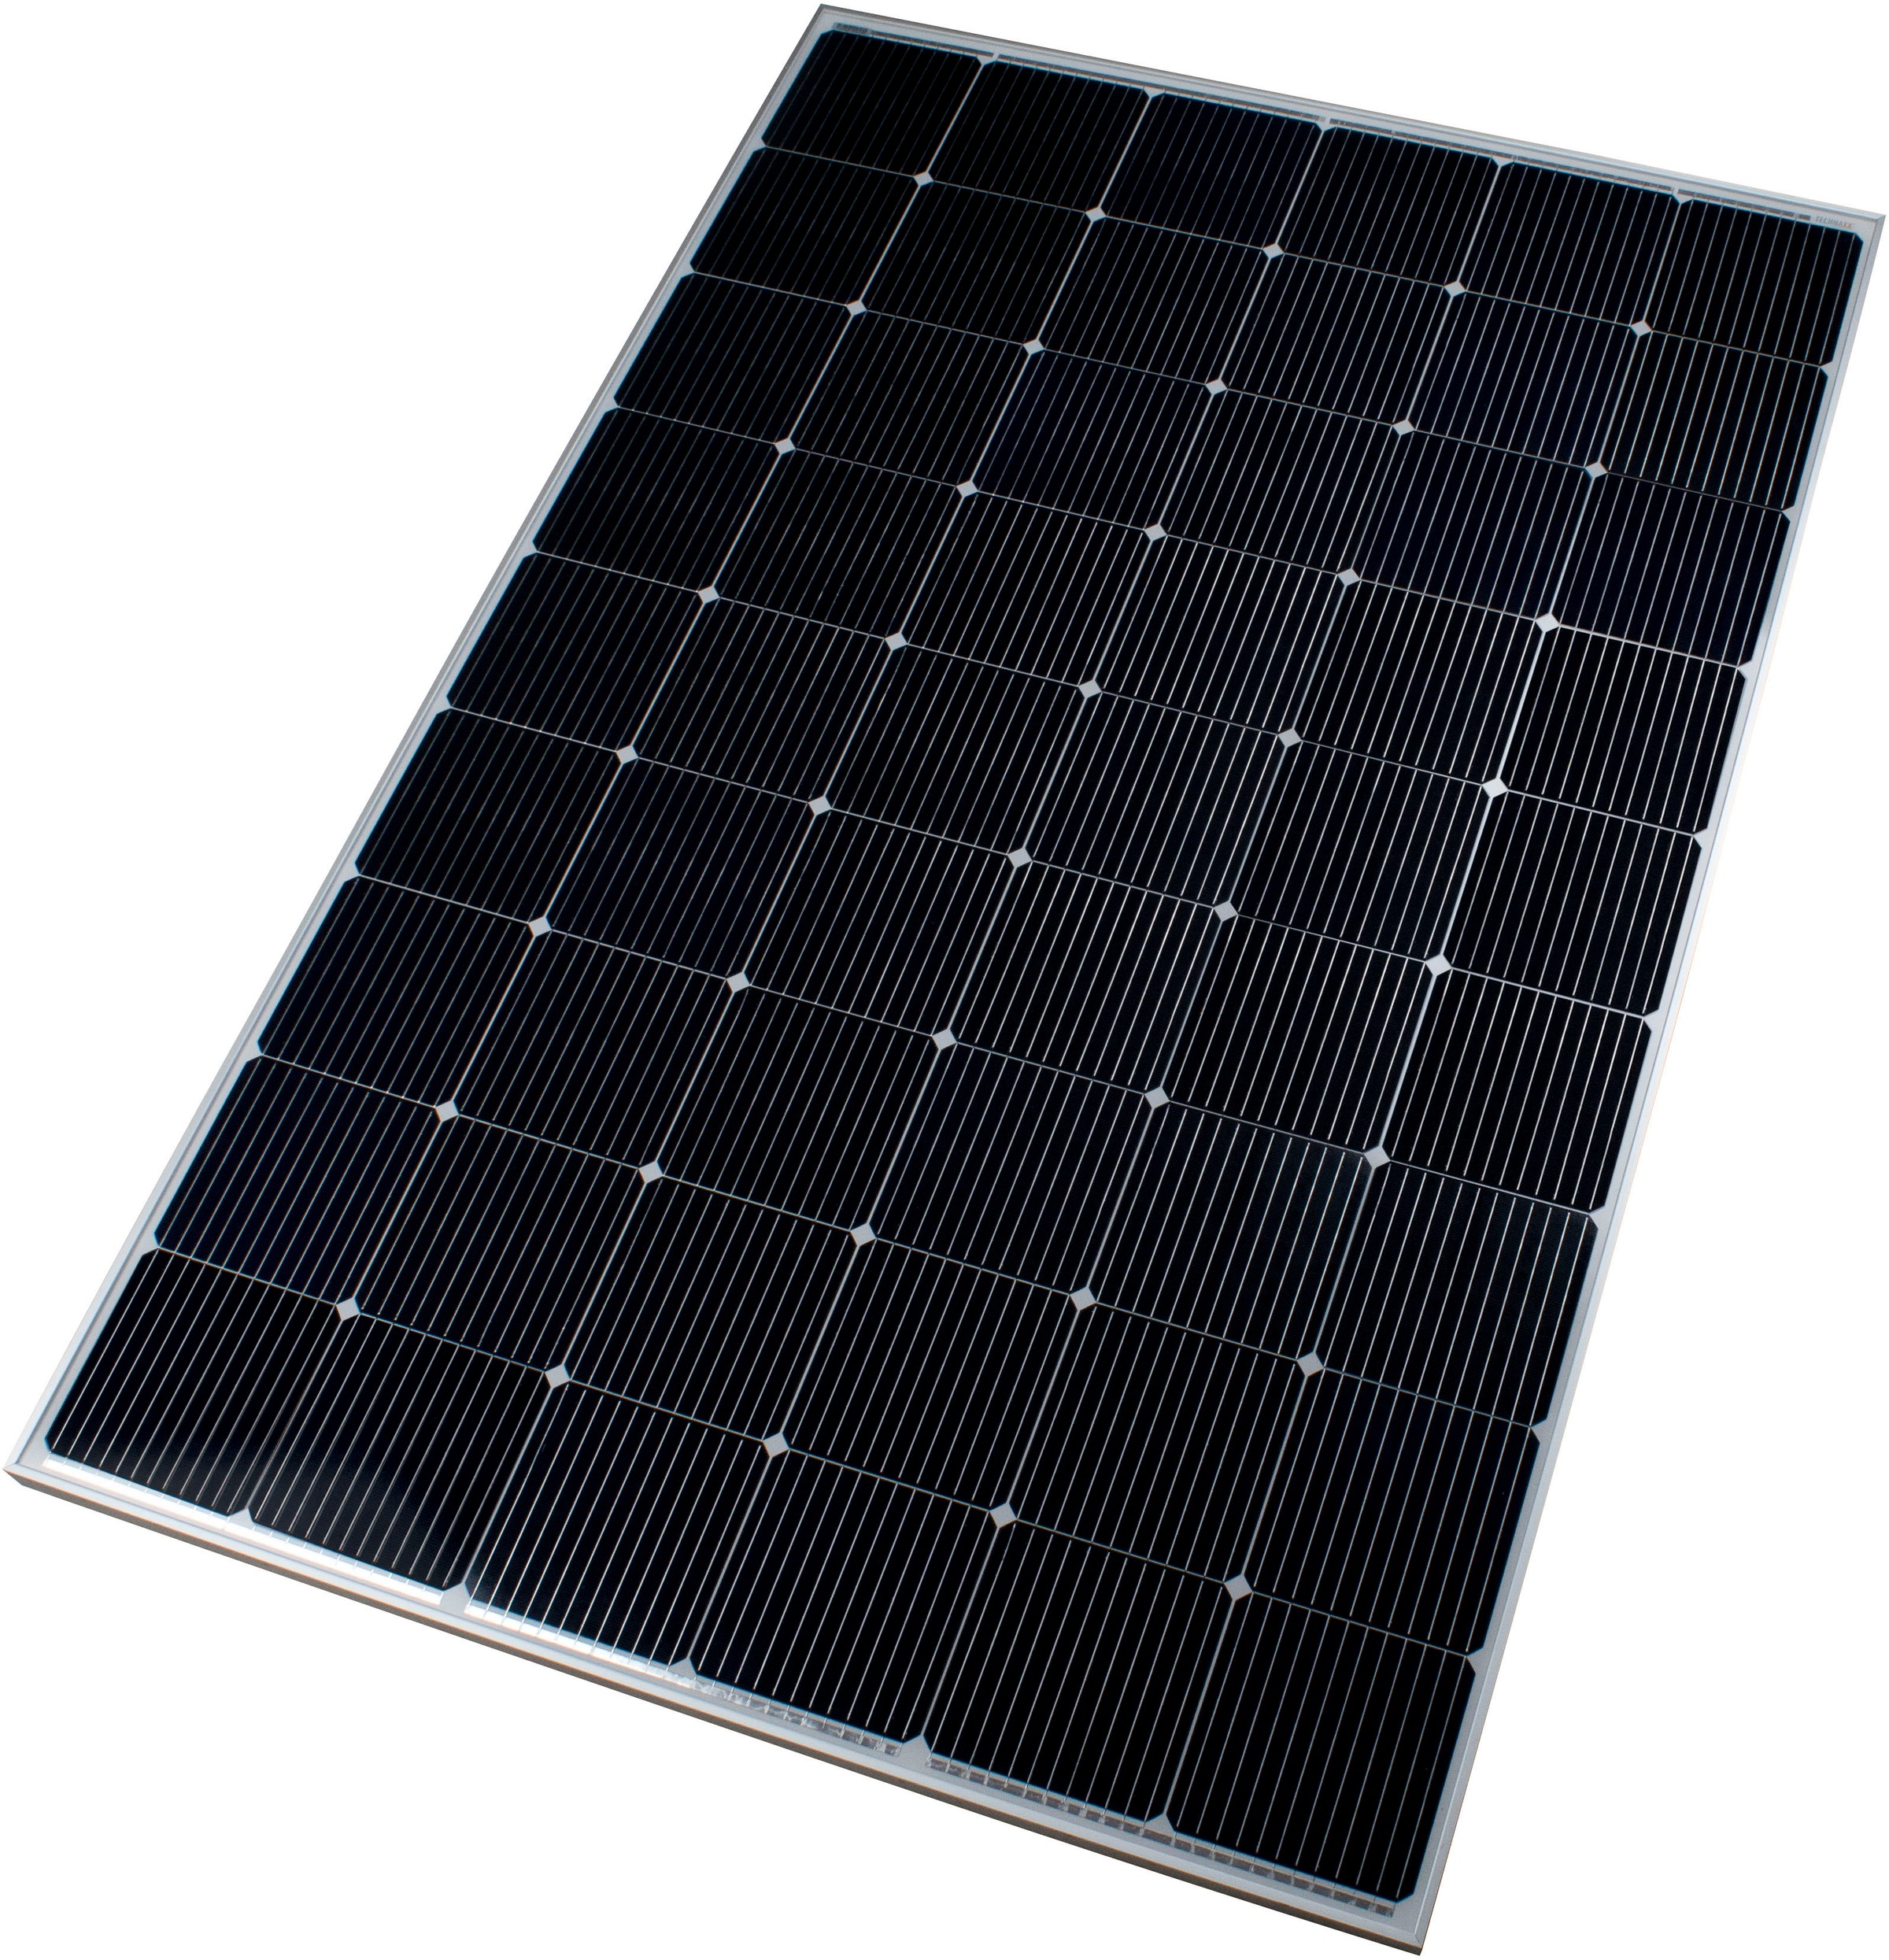 Technik Solar preiswert bestellen